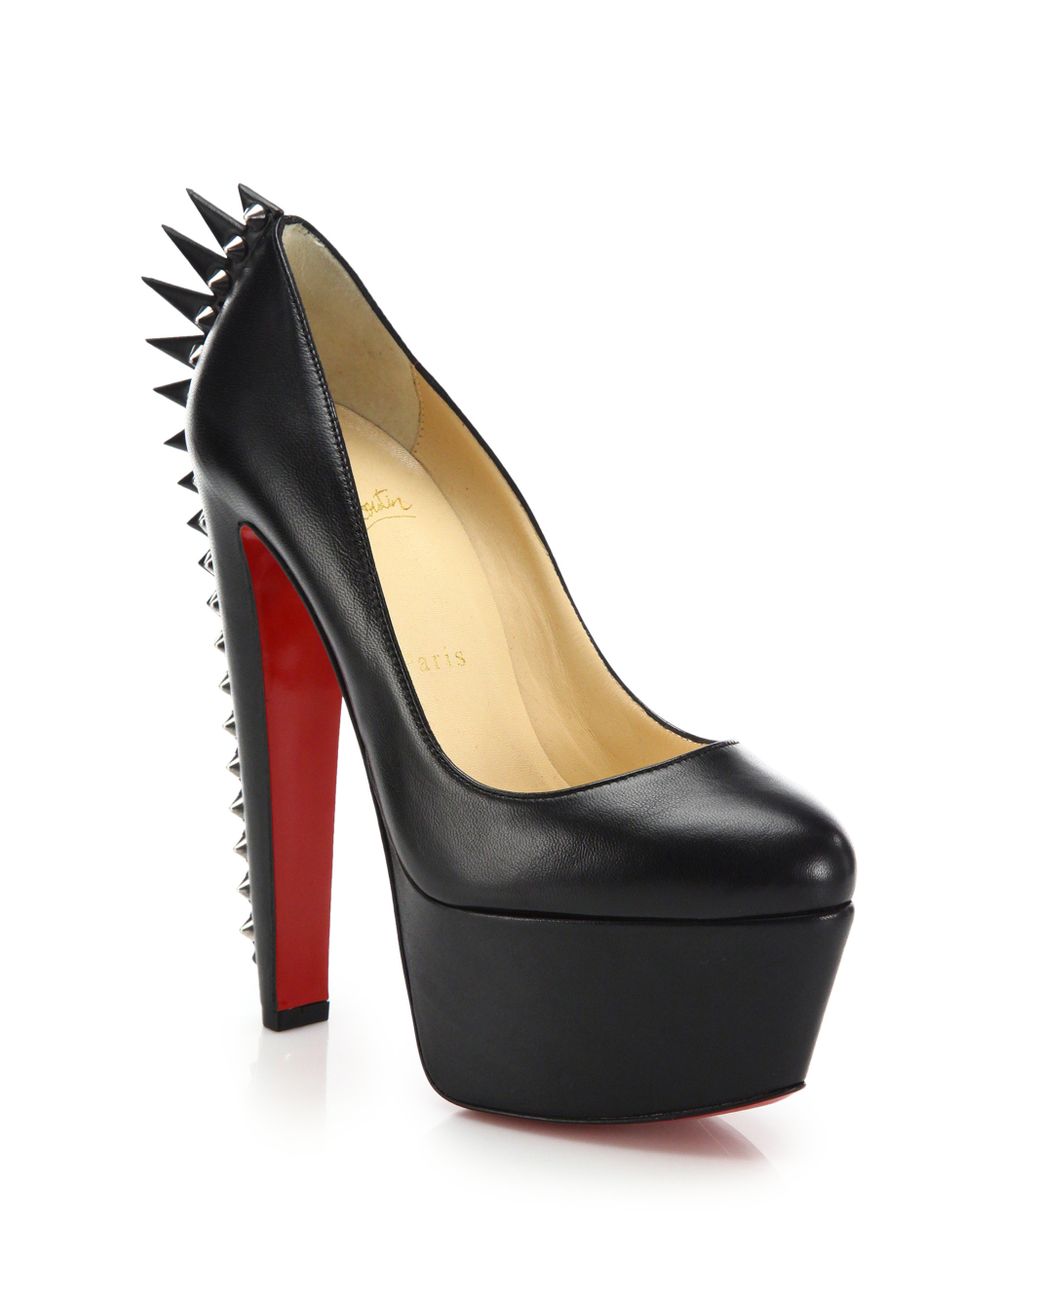 Sold at Auction: Christian Louboutin - Spike Platform Black Heels